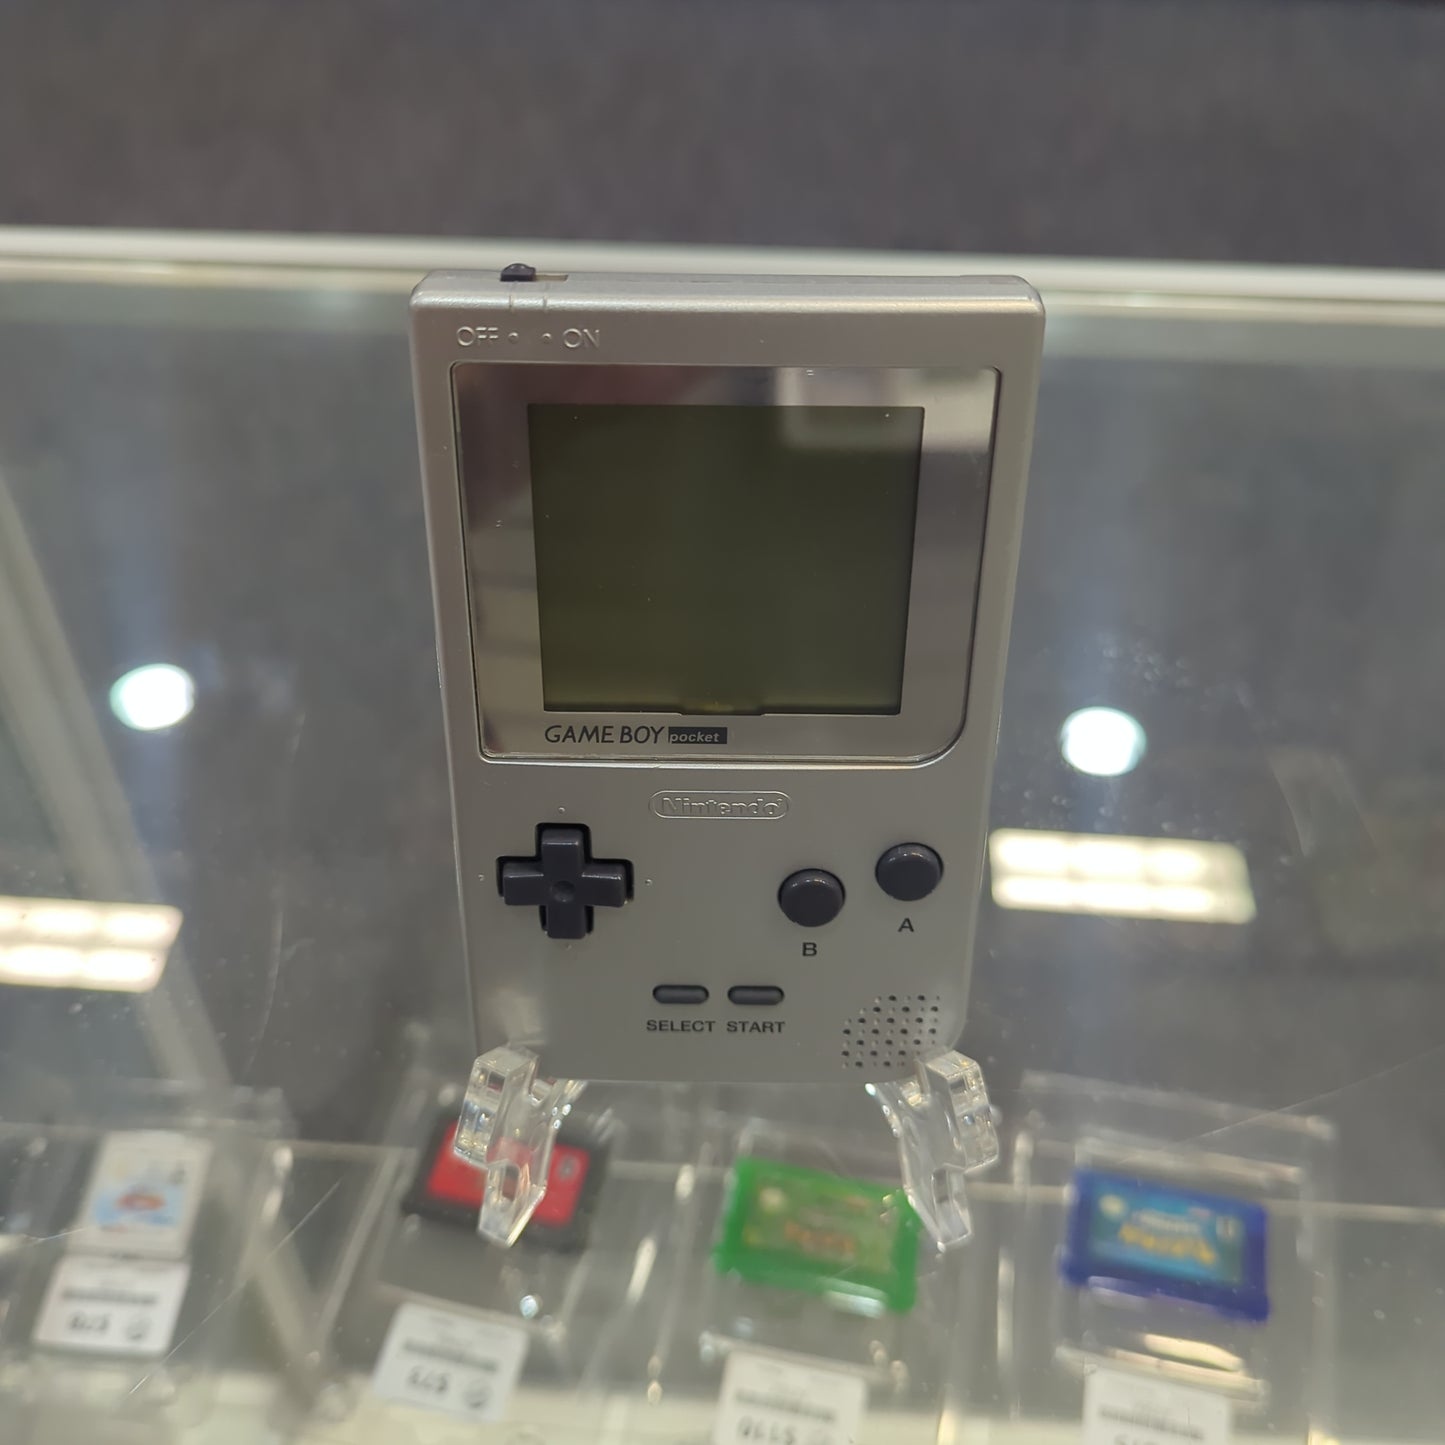 GameBoy Pocket Console - GameBoy